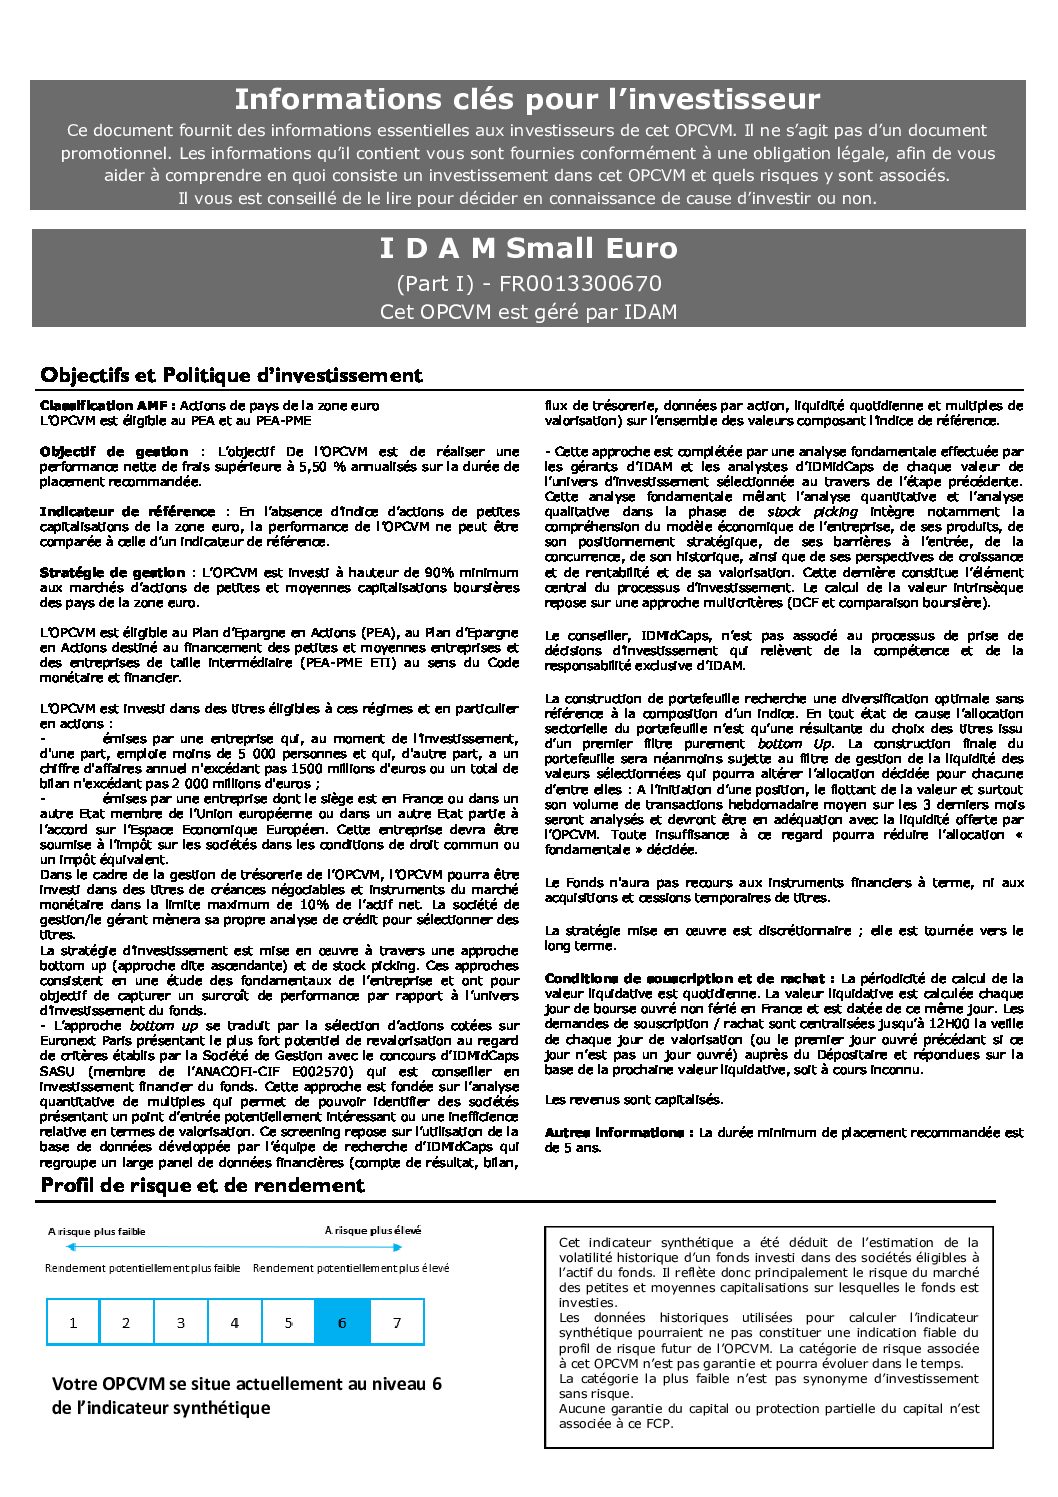 DICI-Part-I-IDAM-SMALL-EURO-2-pdf